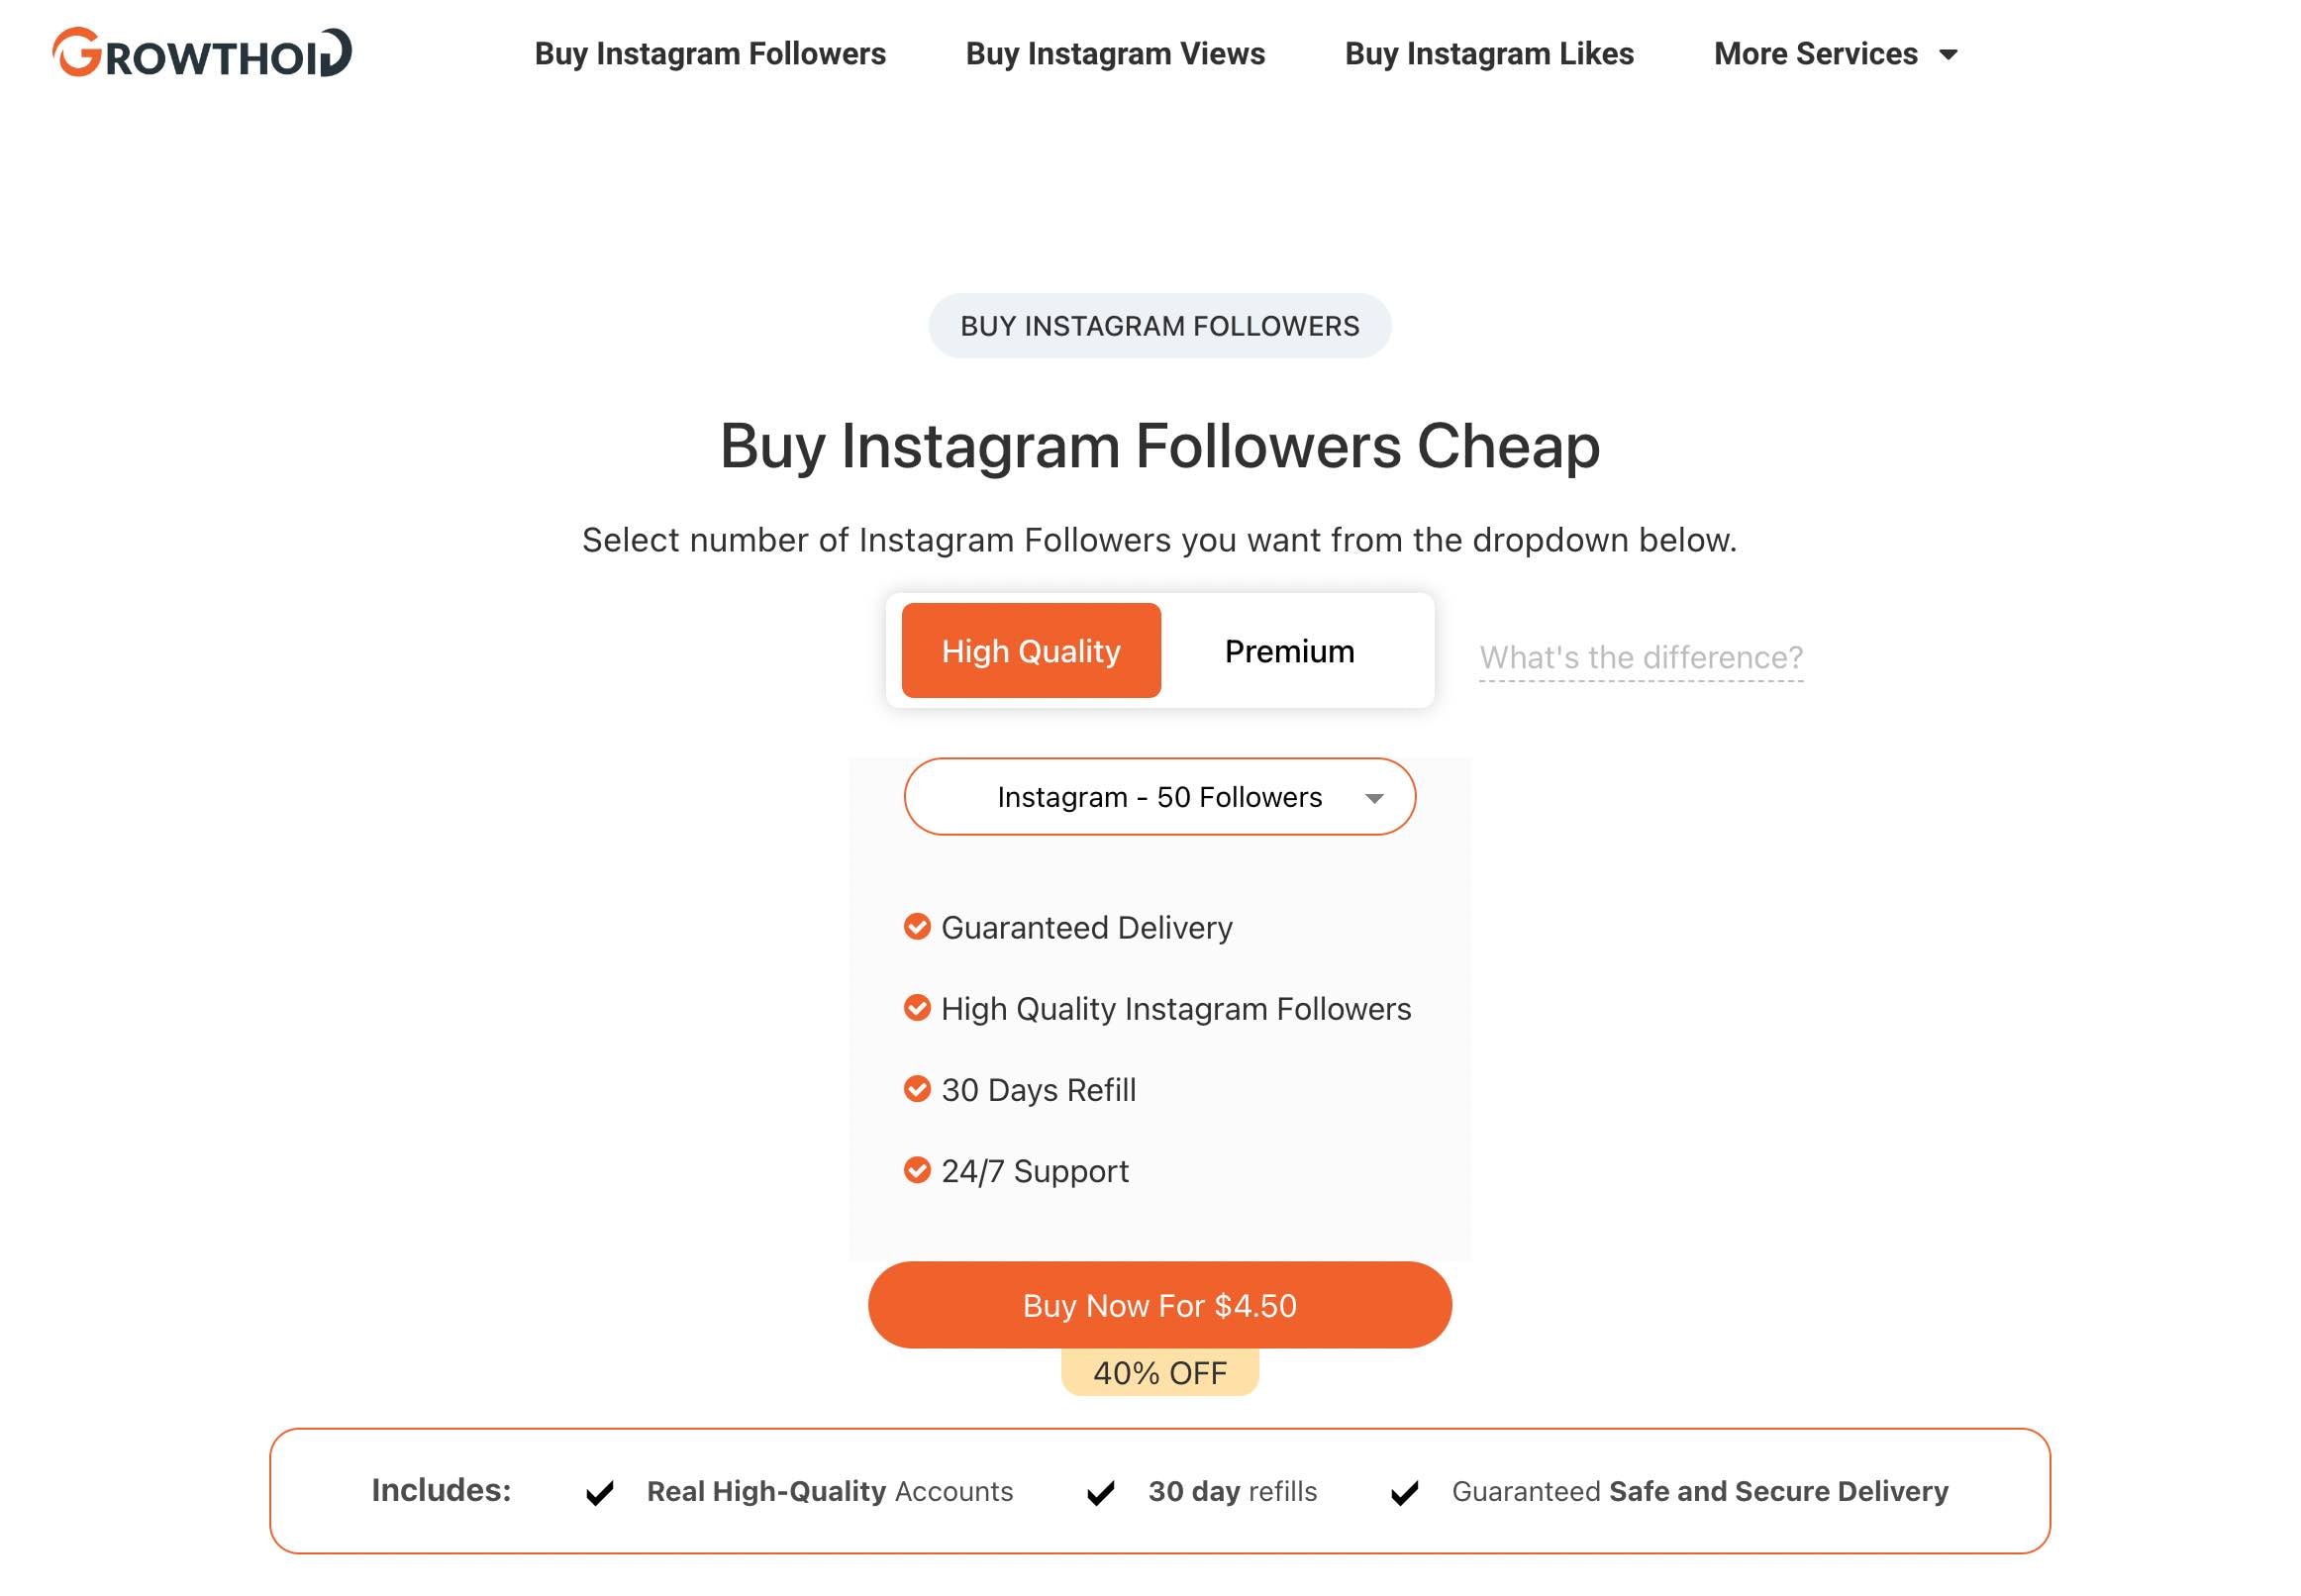 growthoid buy instagram followers uae